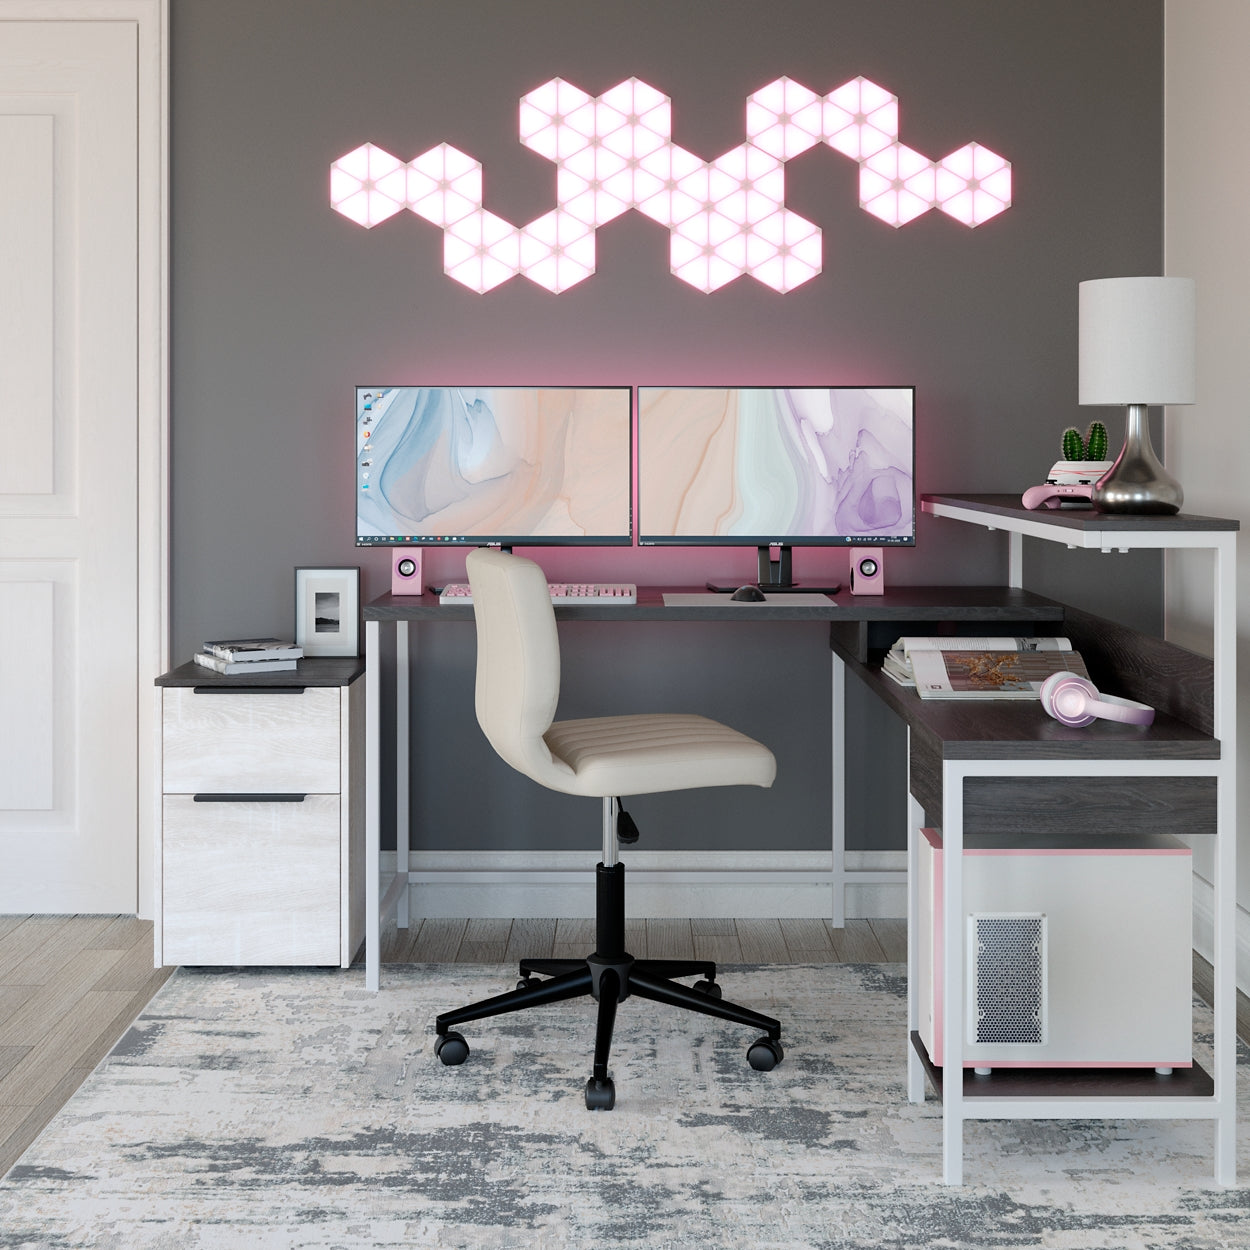 Dorrinson L-Desk with Storage at Cloud 9 Mattress & Furniture furniture, home furnishing, home decor